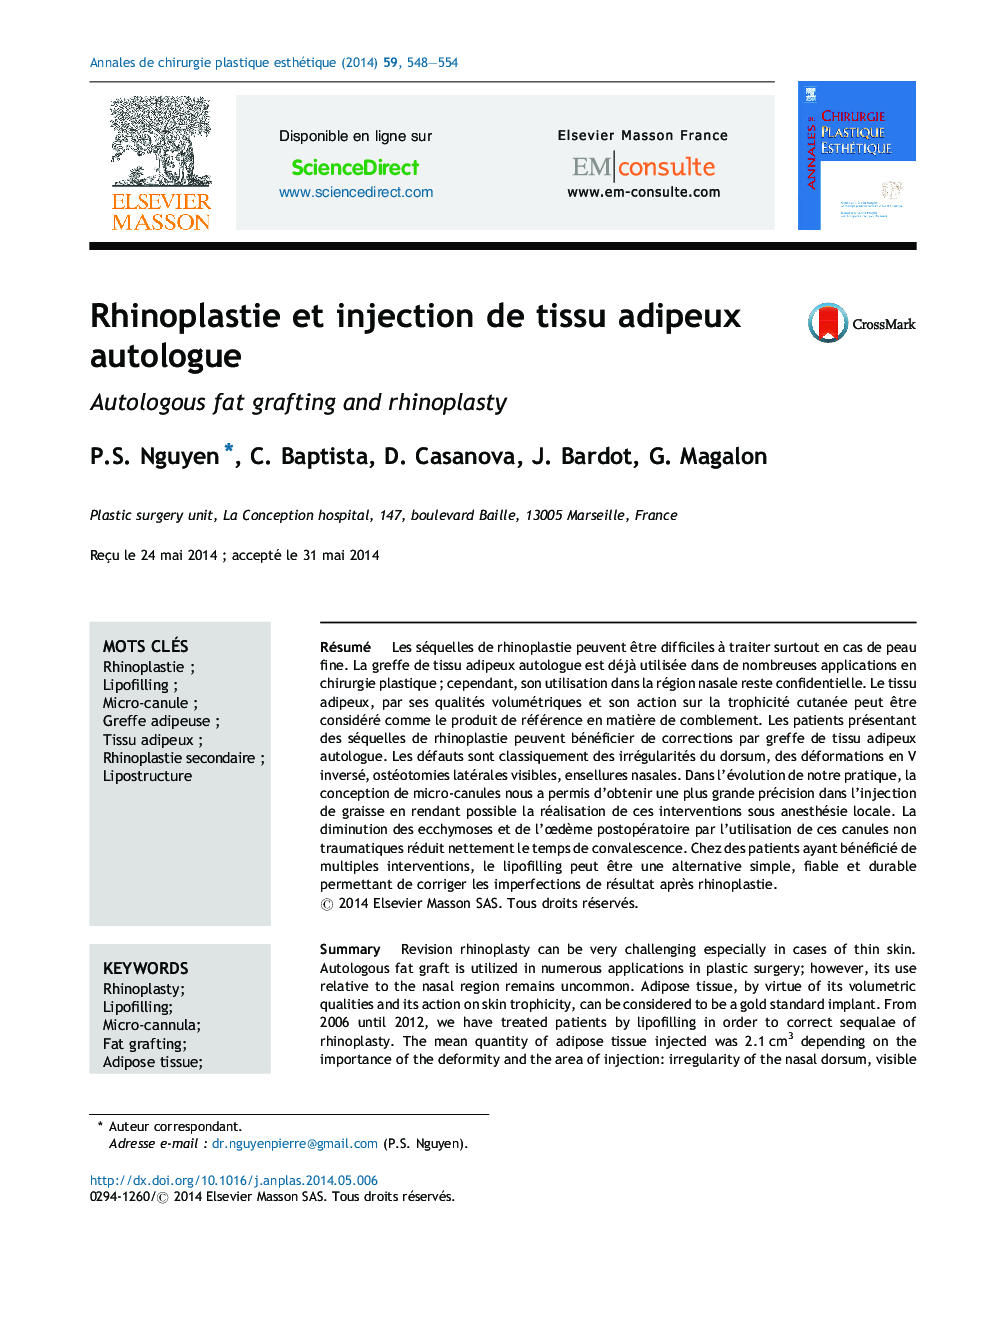 Rhinoplastie et injection de tissu adipeux autologue